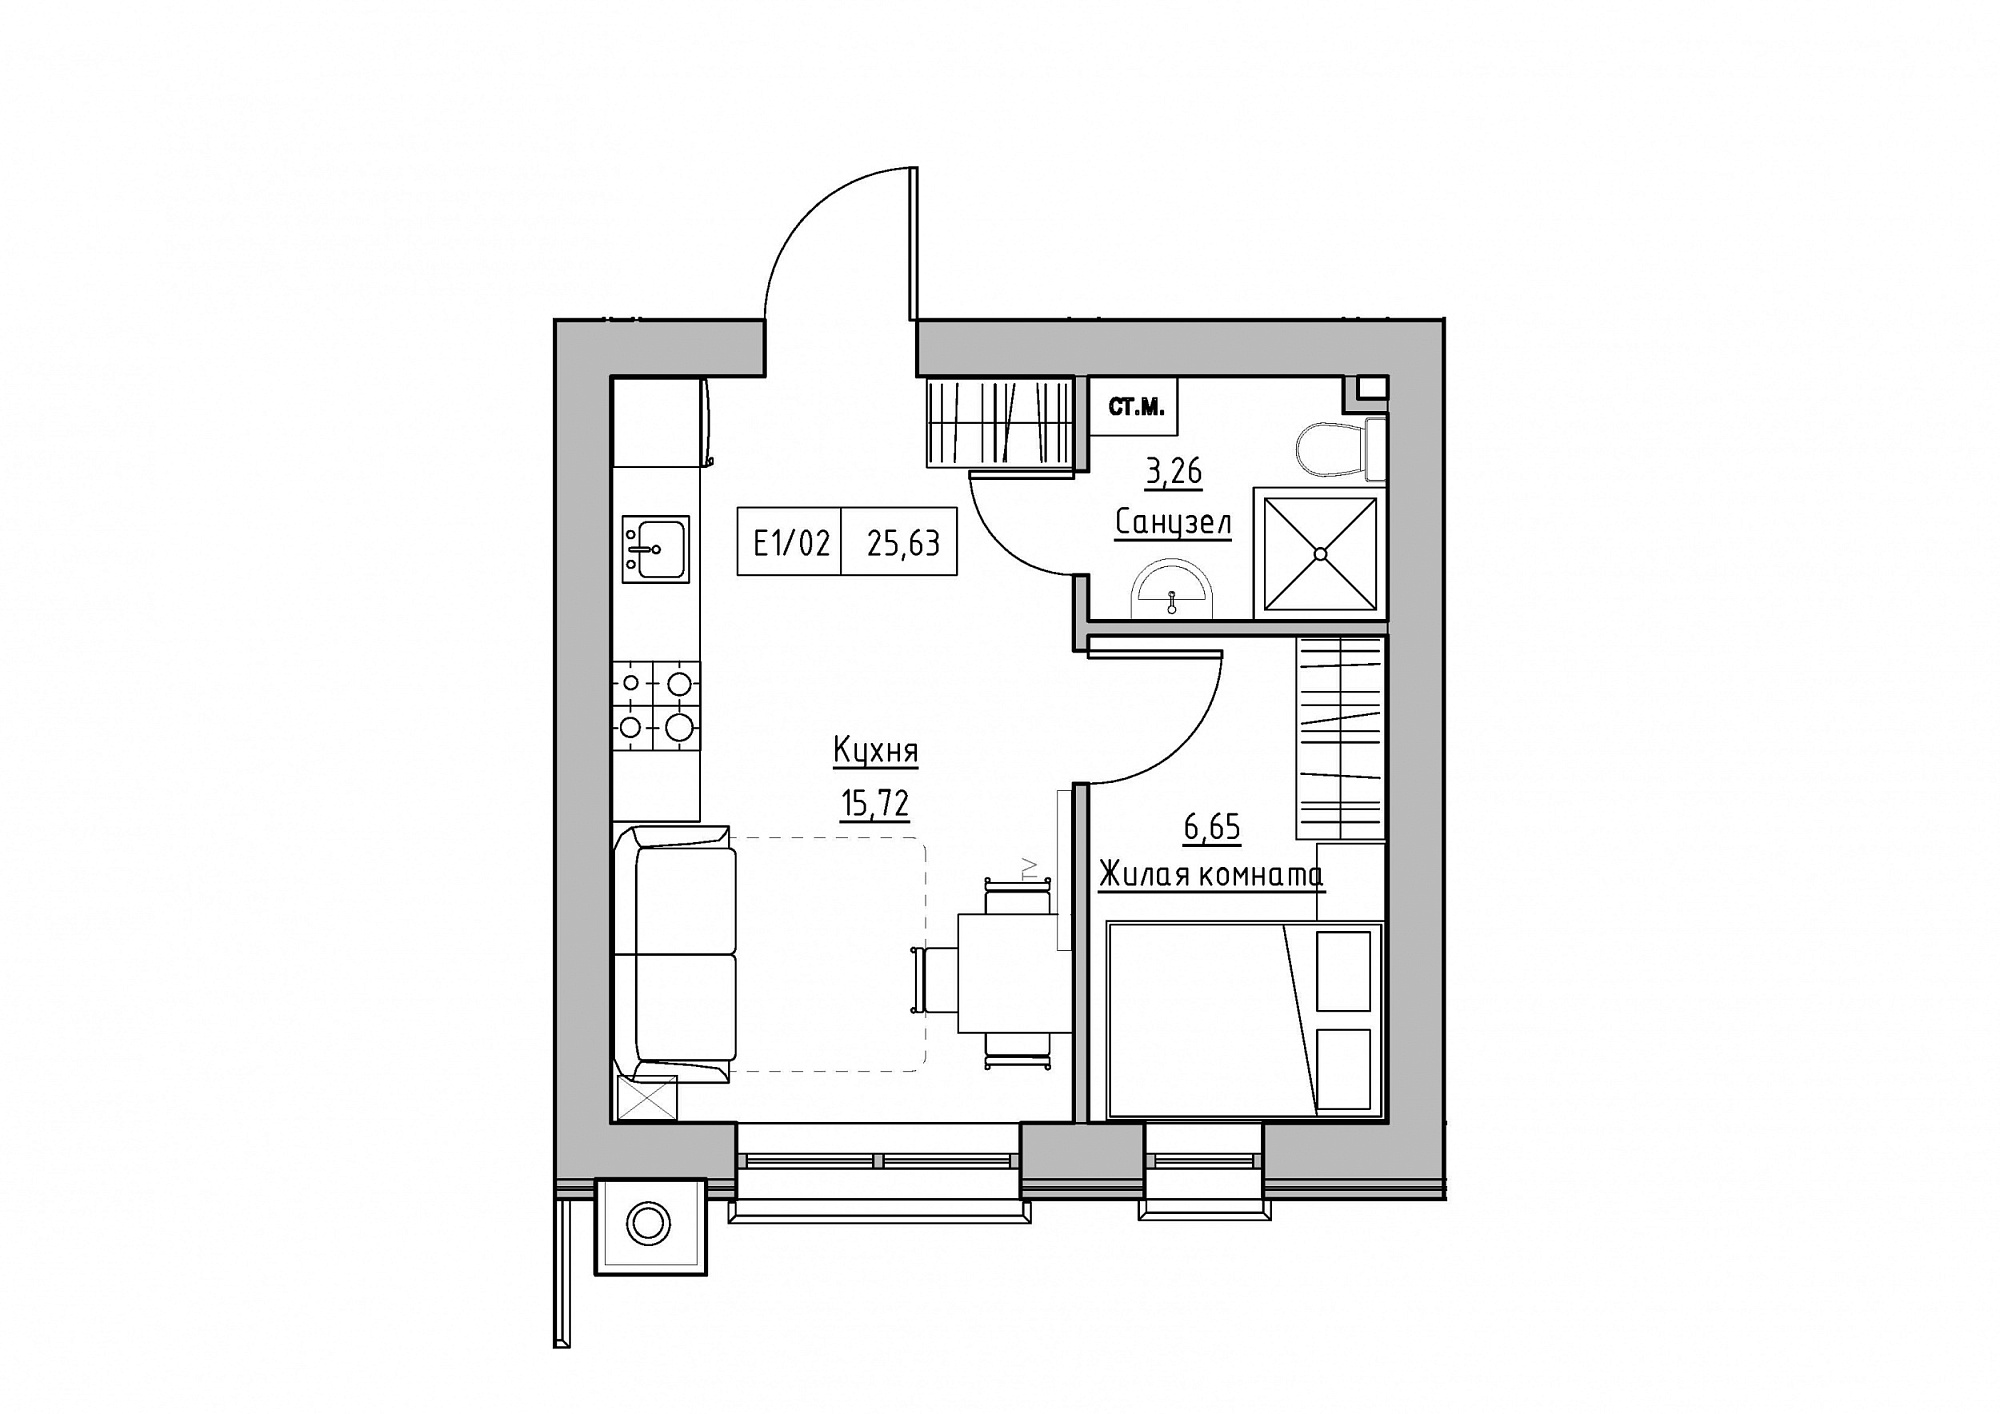 Planning 1-rm flats area 25.63m2, KS-012-03/0004.